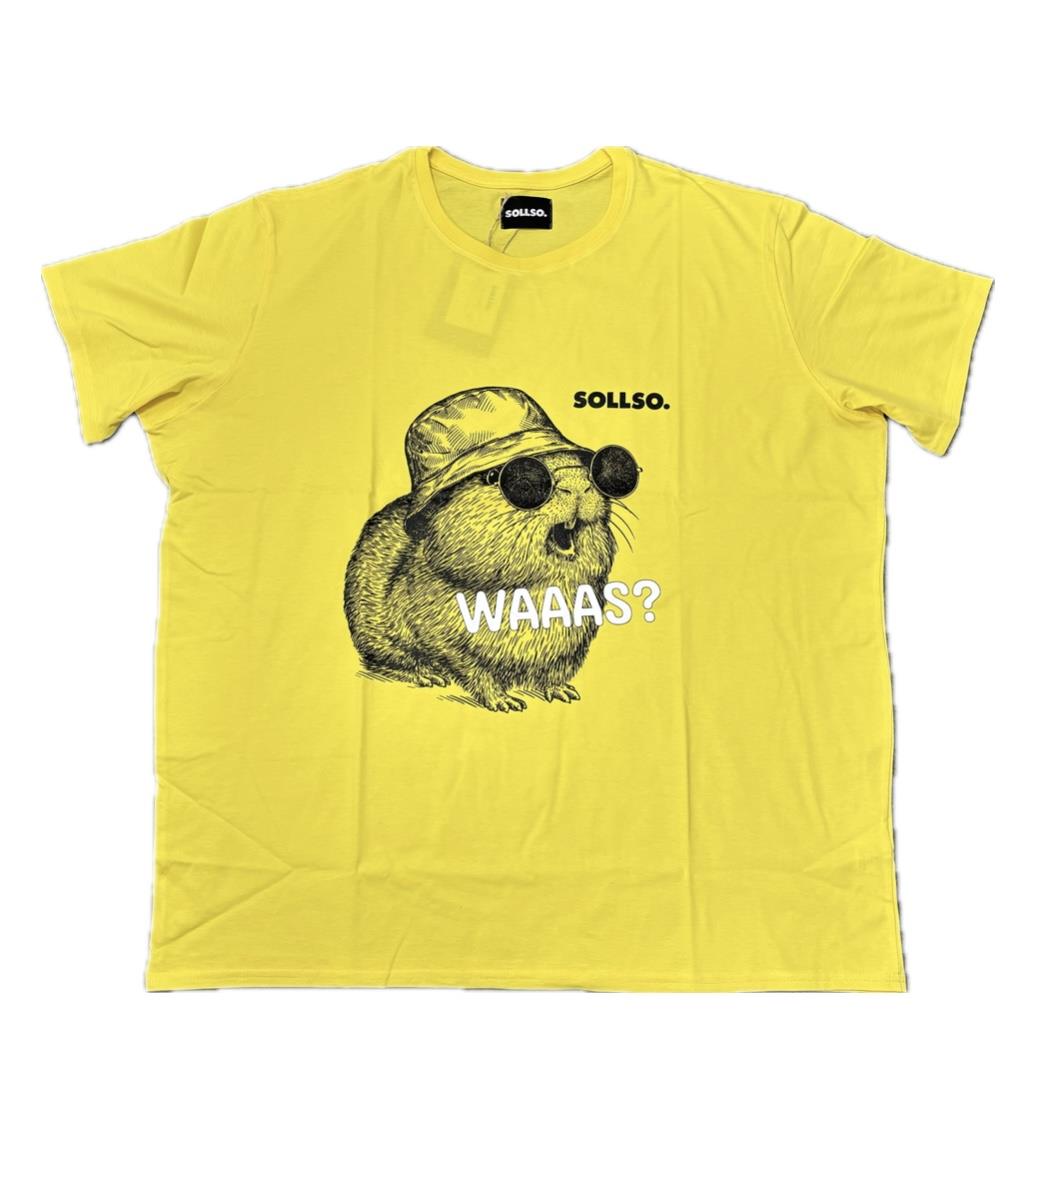 SOLLSO. T-Shirt "Guinea Pig" Farbe Summer Sun, Größe S